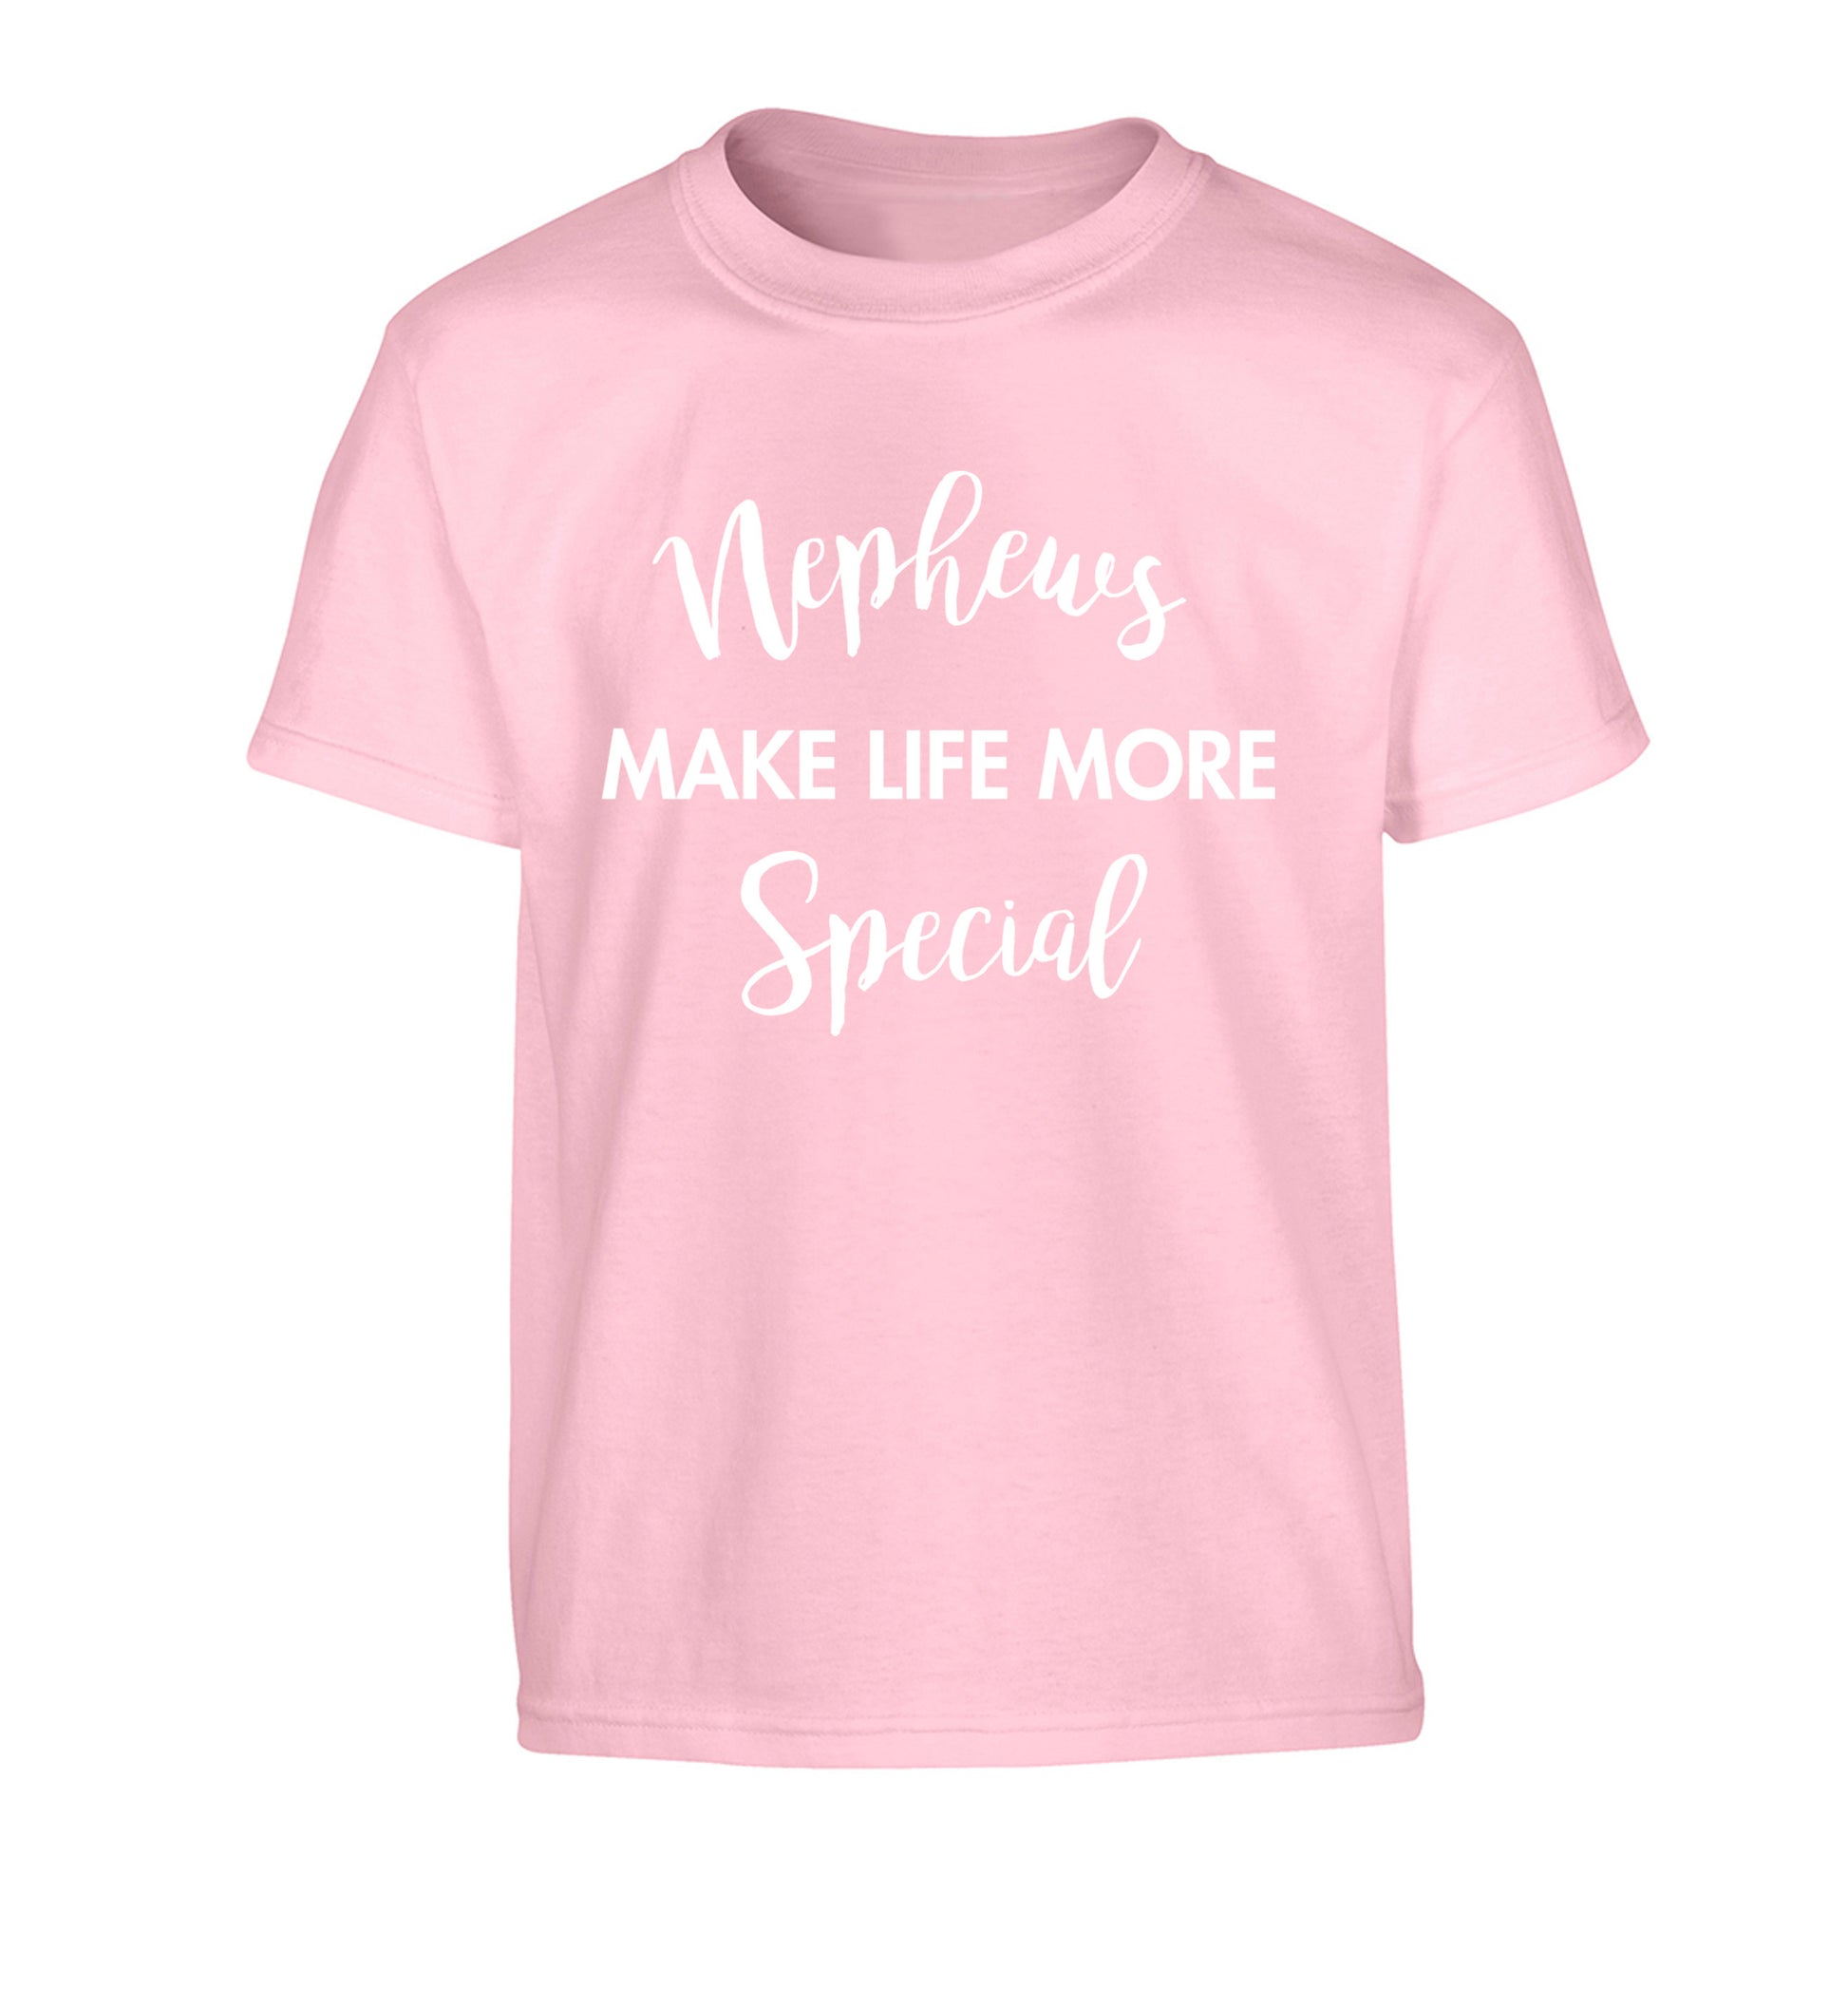 Nephews make life more special Children's light pink Tshirt 12-14 Years